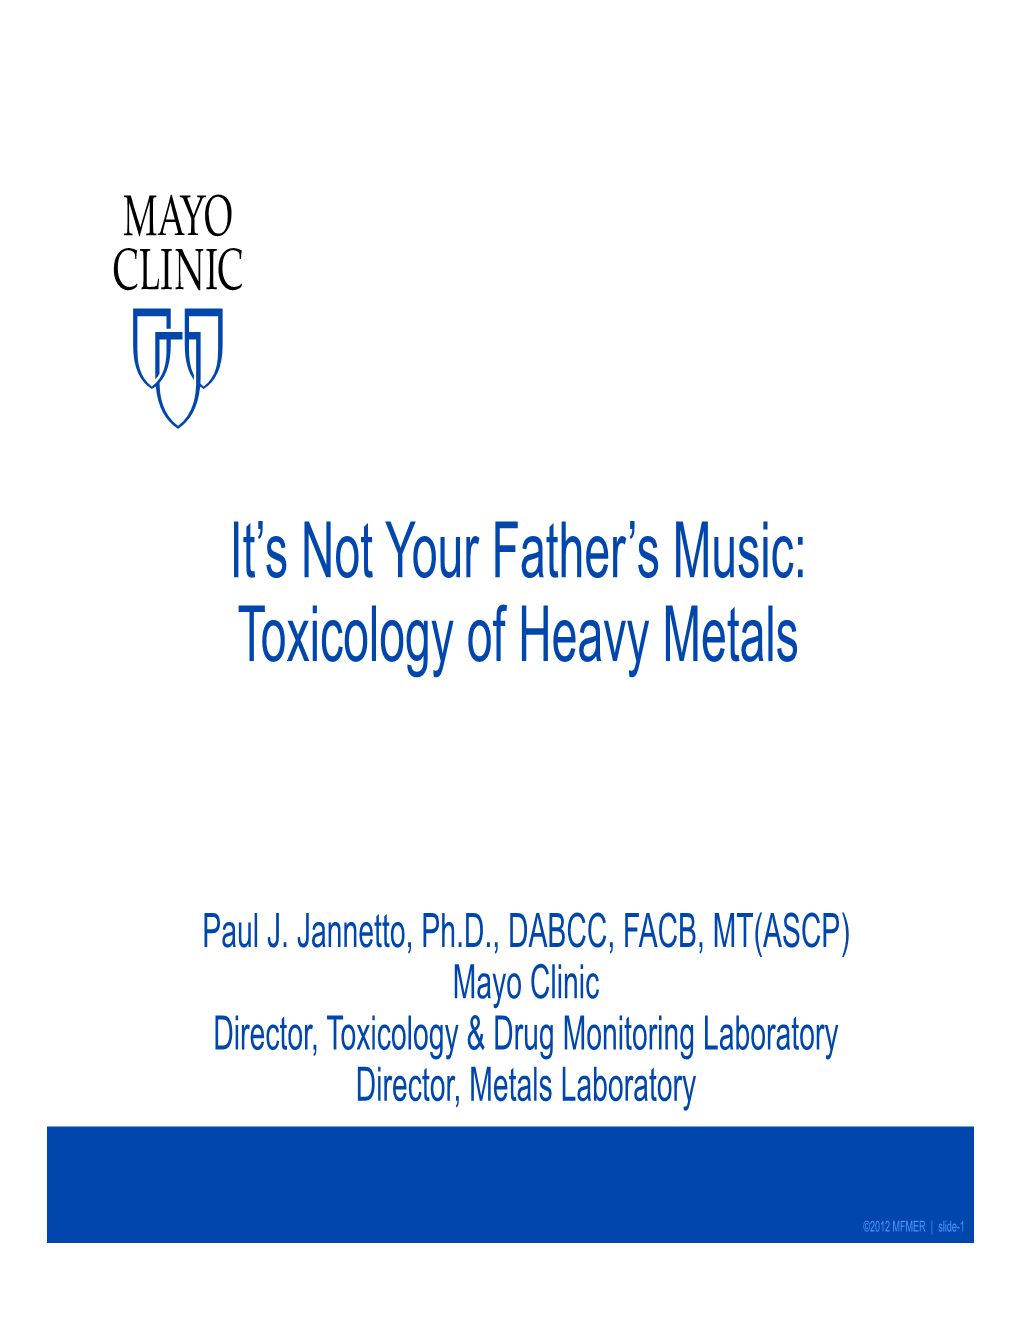 Toxicology of Heavy Metals